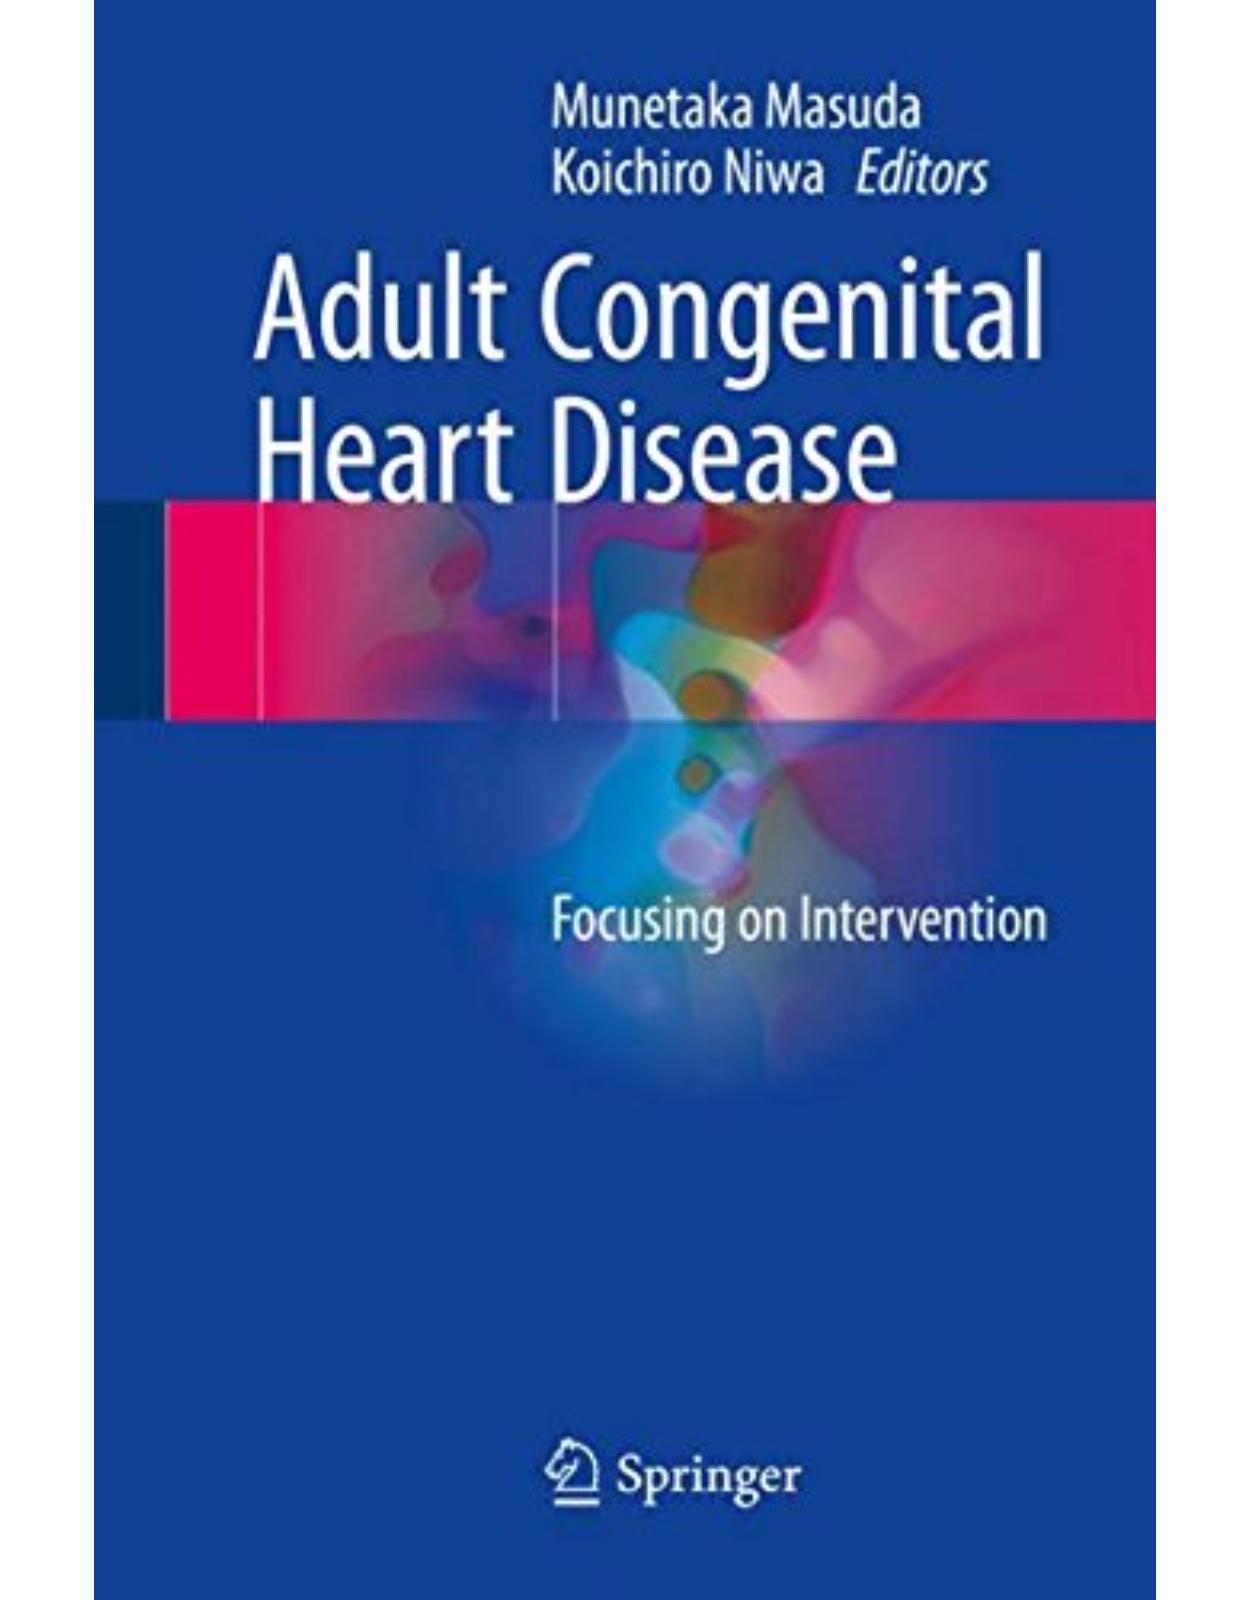 Adult Congenital Heart Disease: Focusing on Intervention